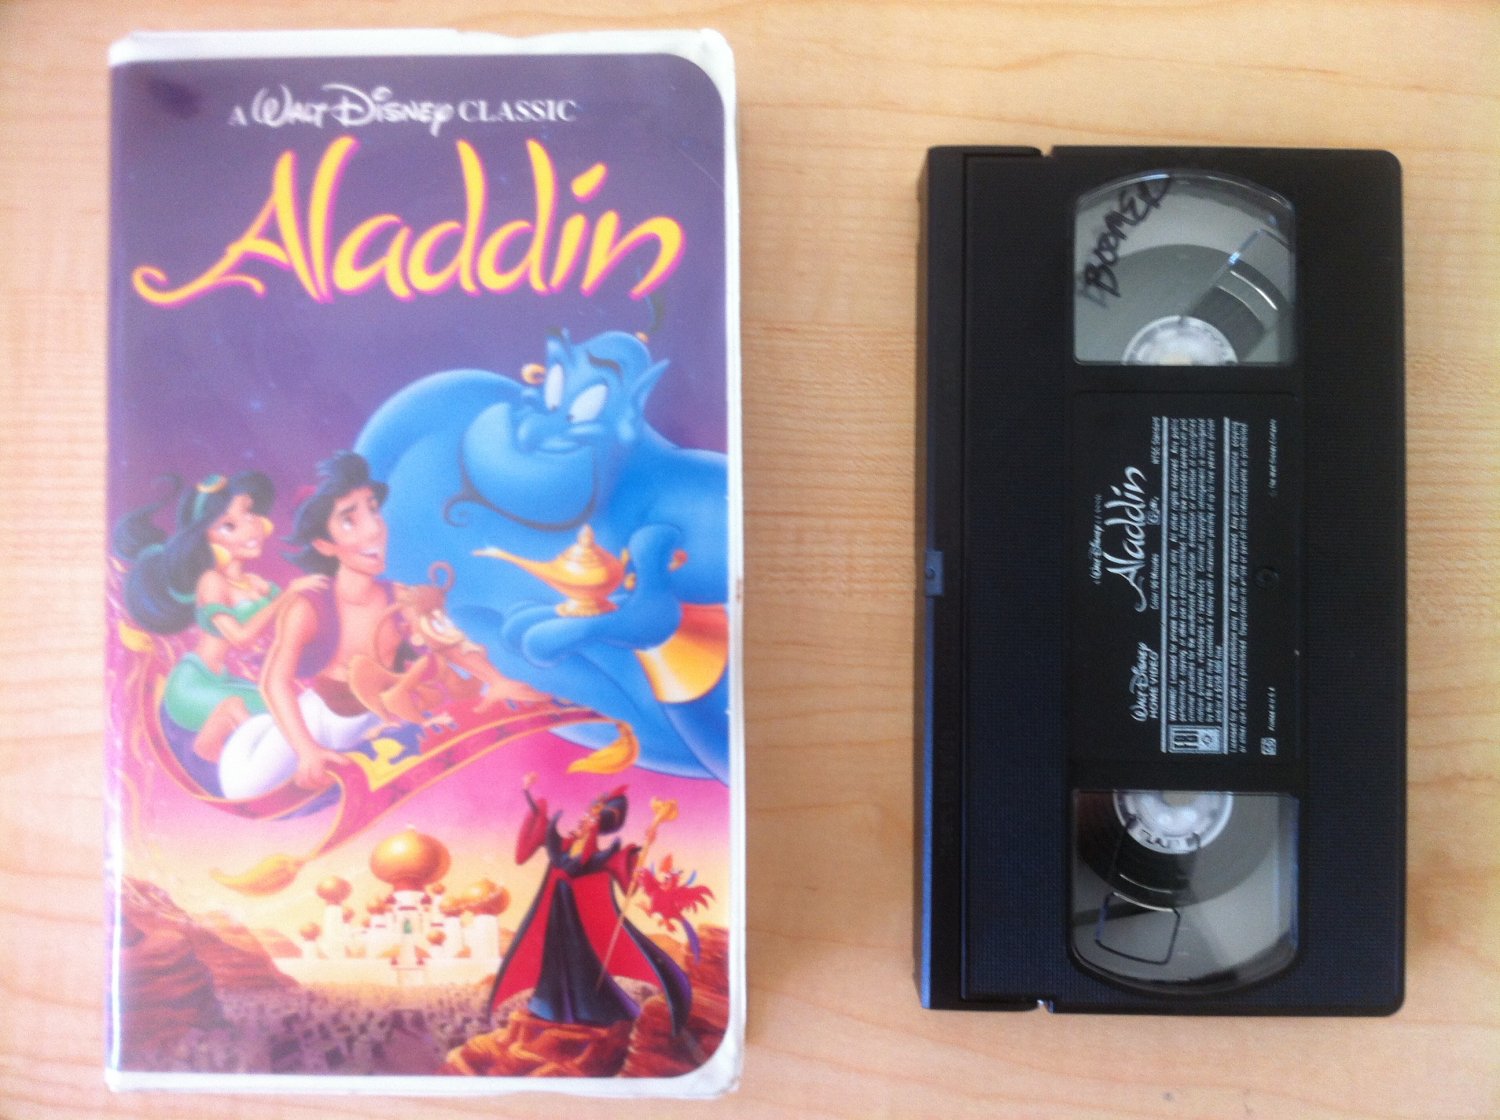 Aladdin instal the last version for ipod